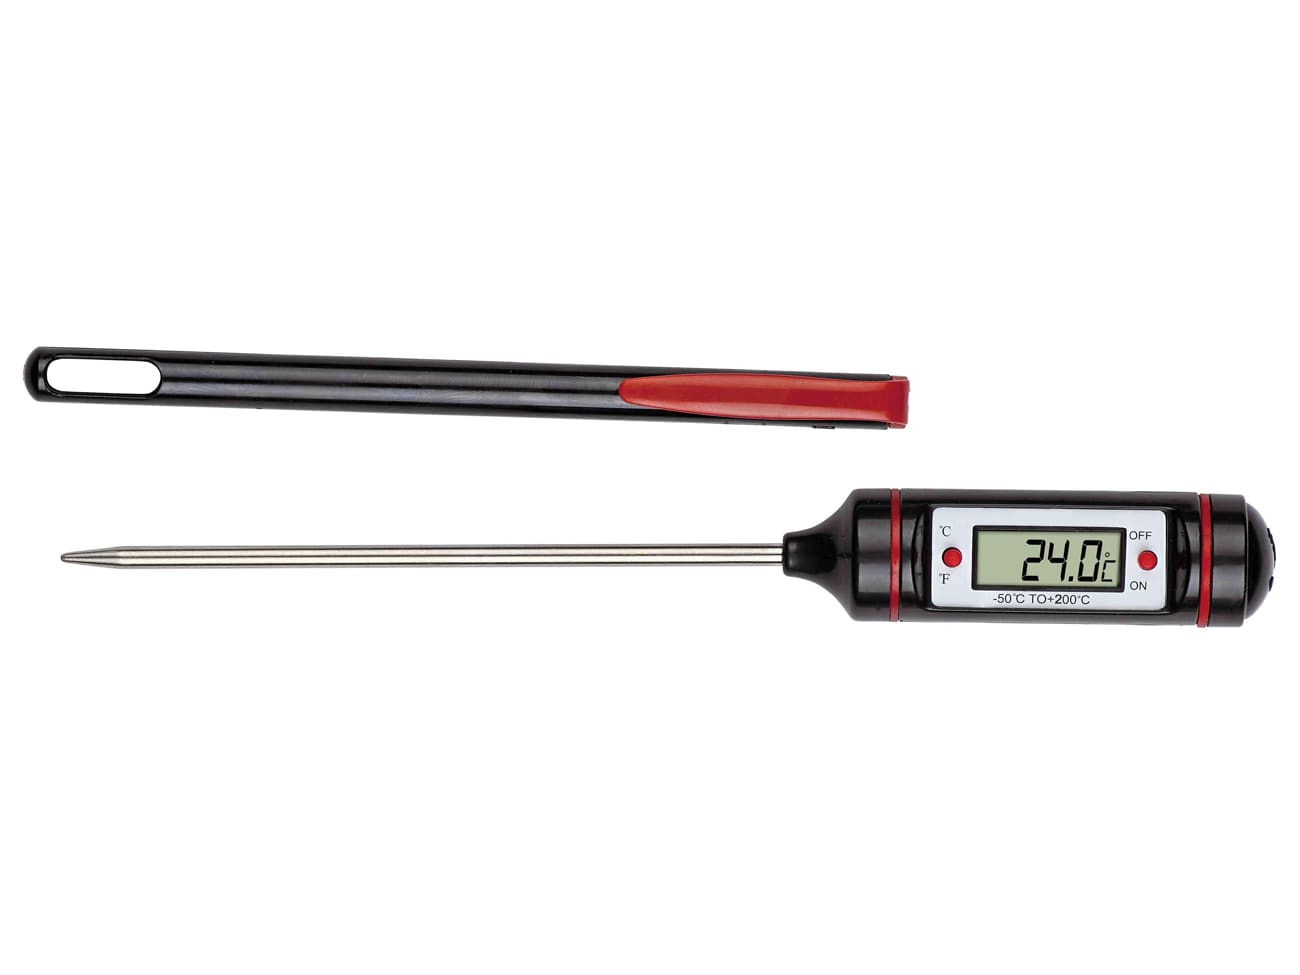 Termometro digitale da cucina con penna digitale - -50°C a + 300°C